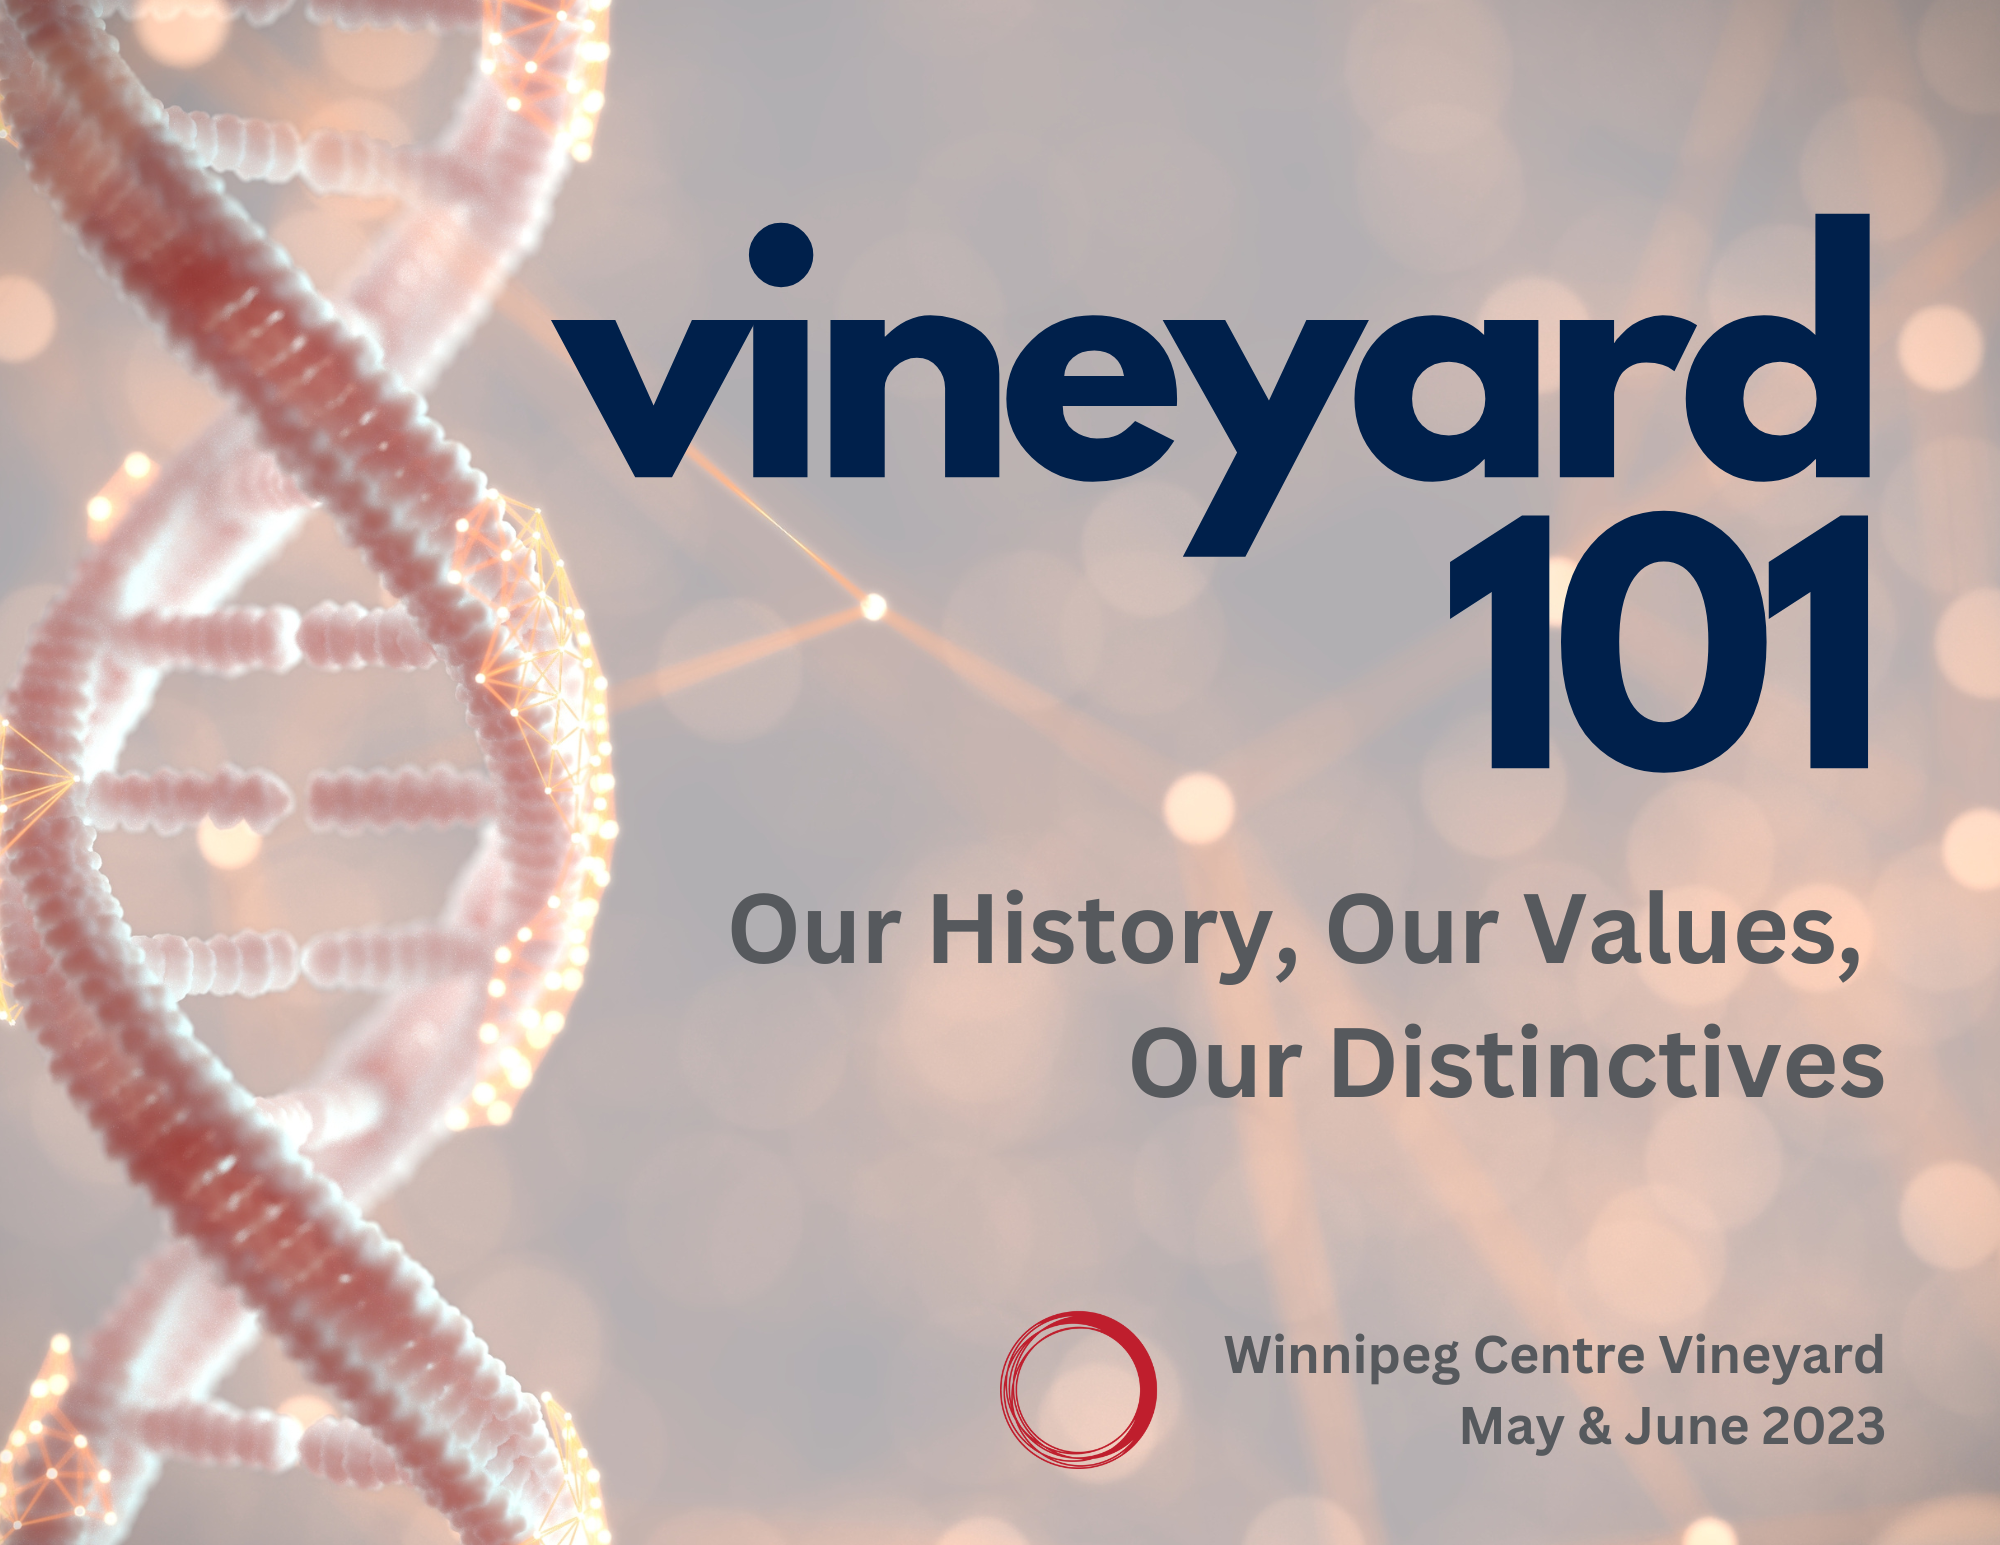 Vineyard 101 : Welcome to the Vineyard!